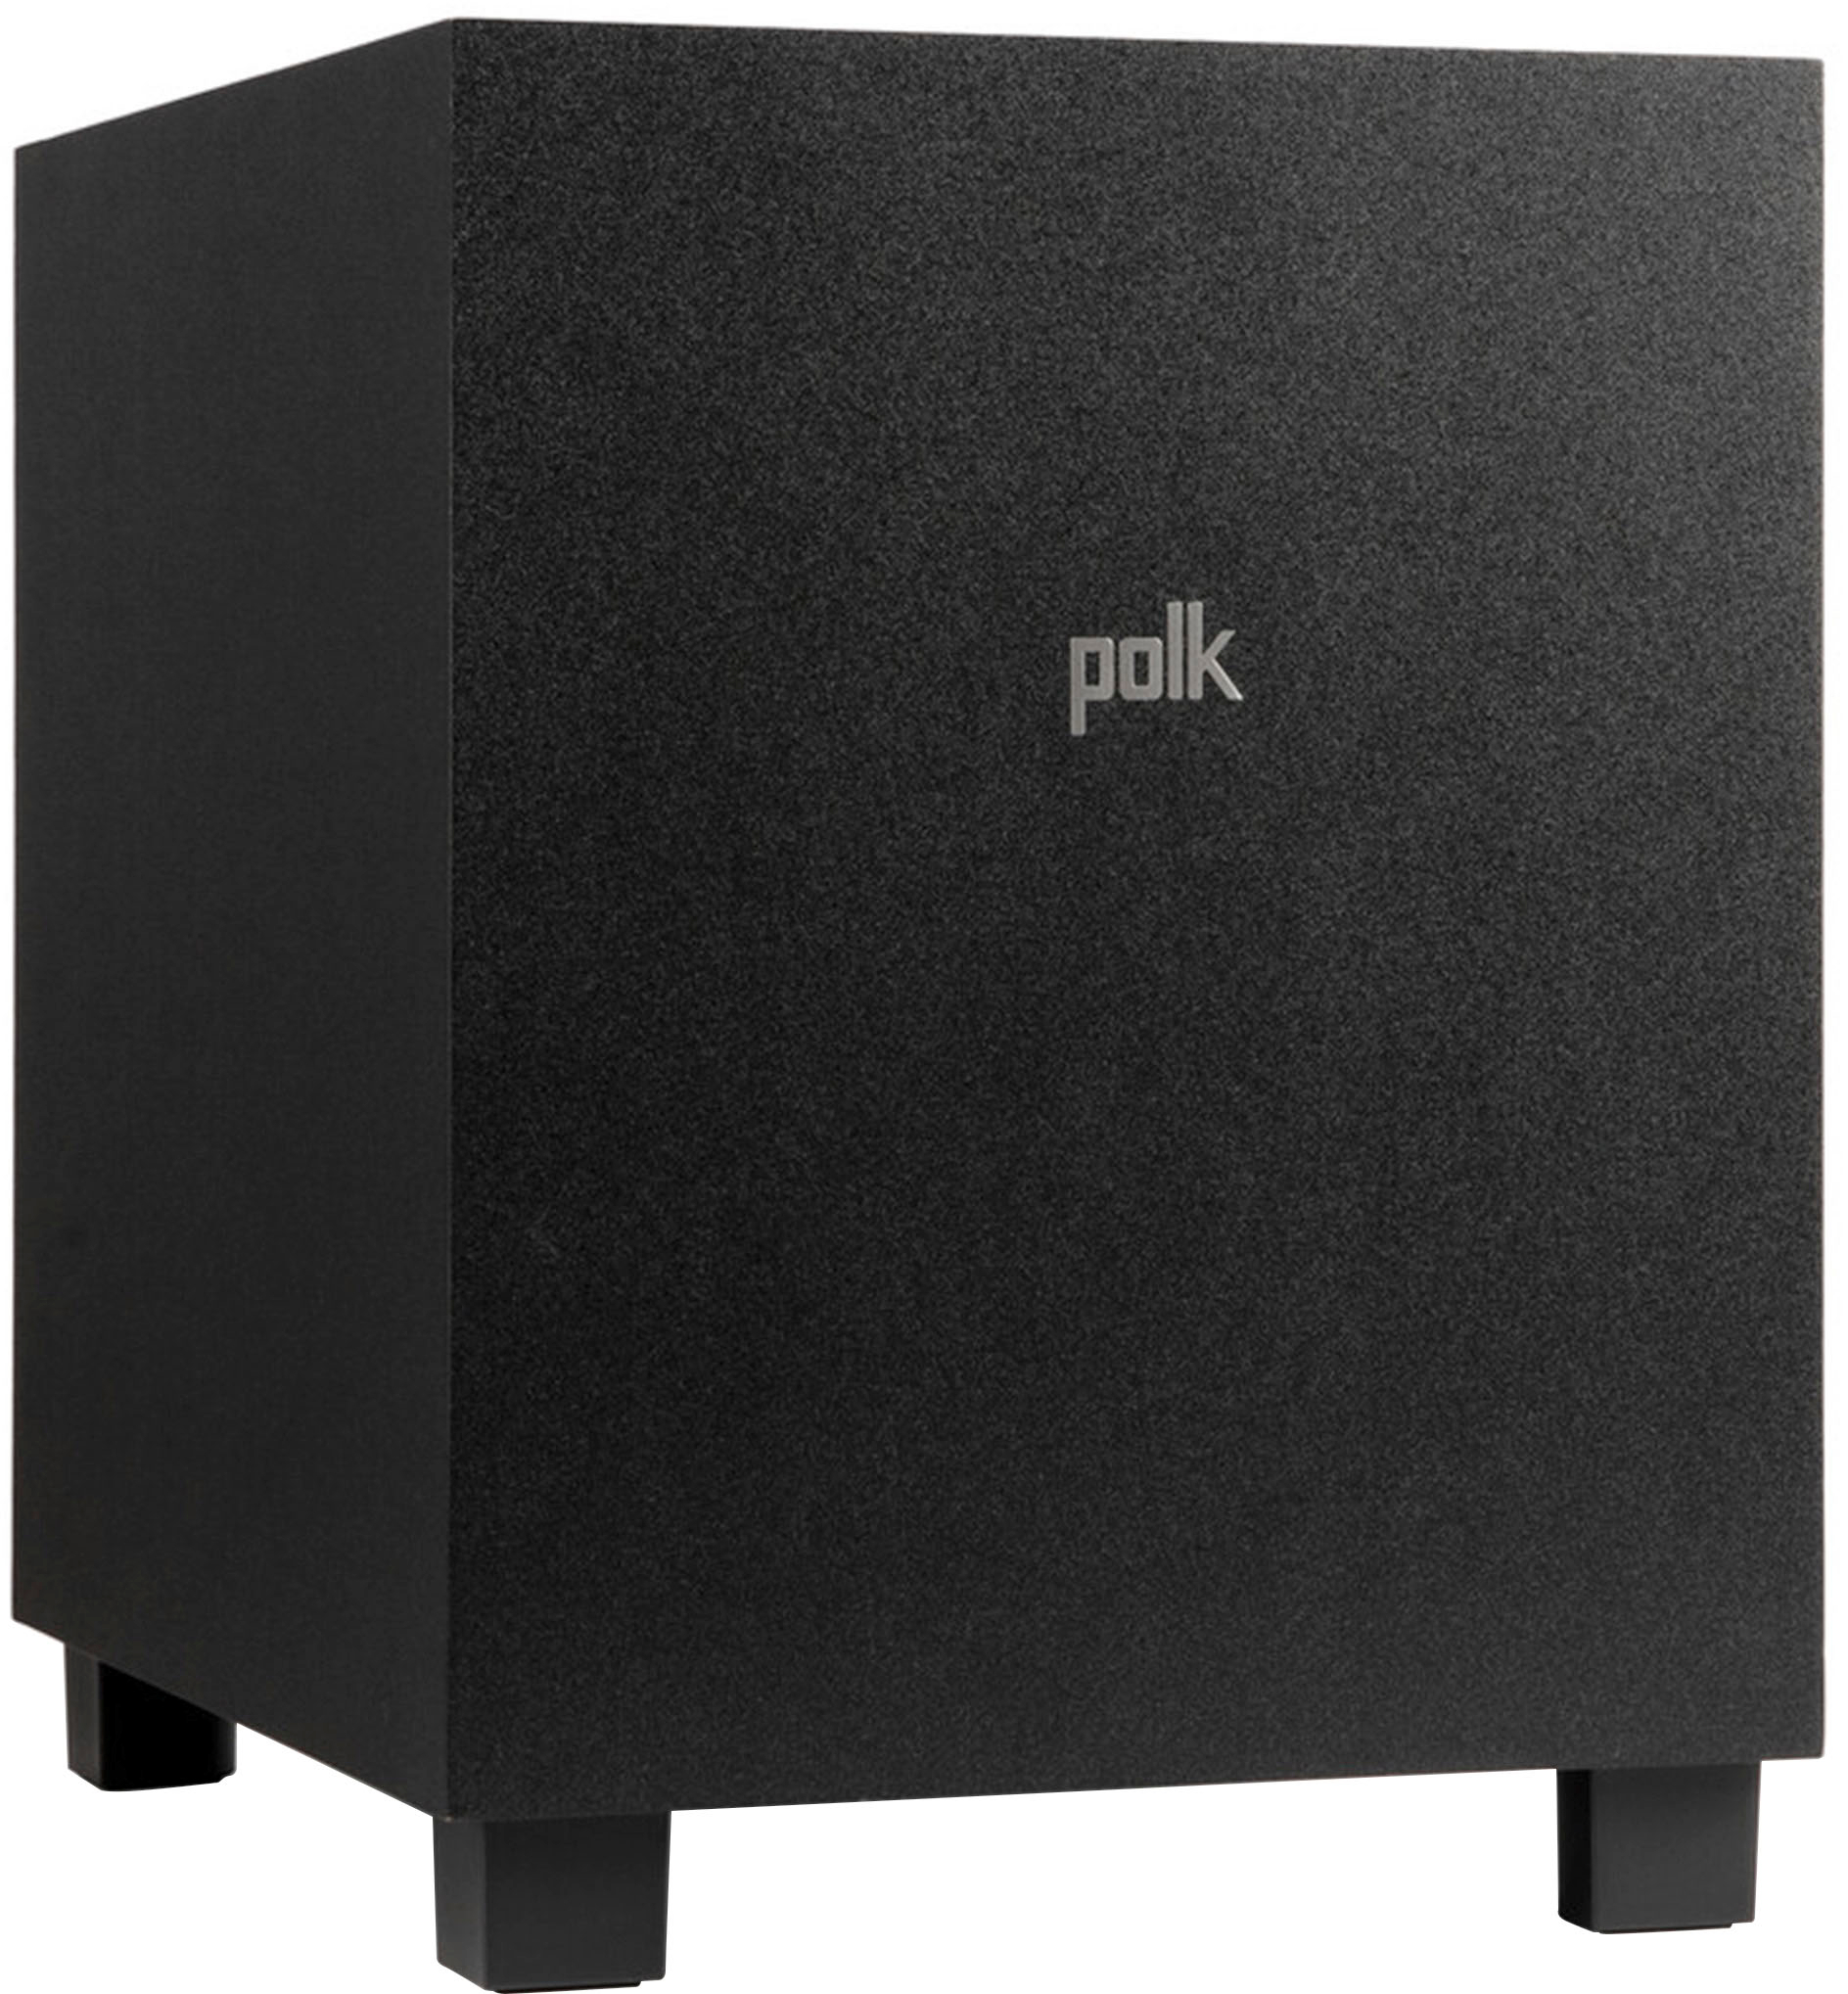 Polk Audio MXT10 - RADIO COLON